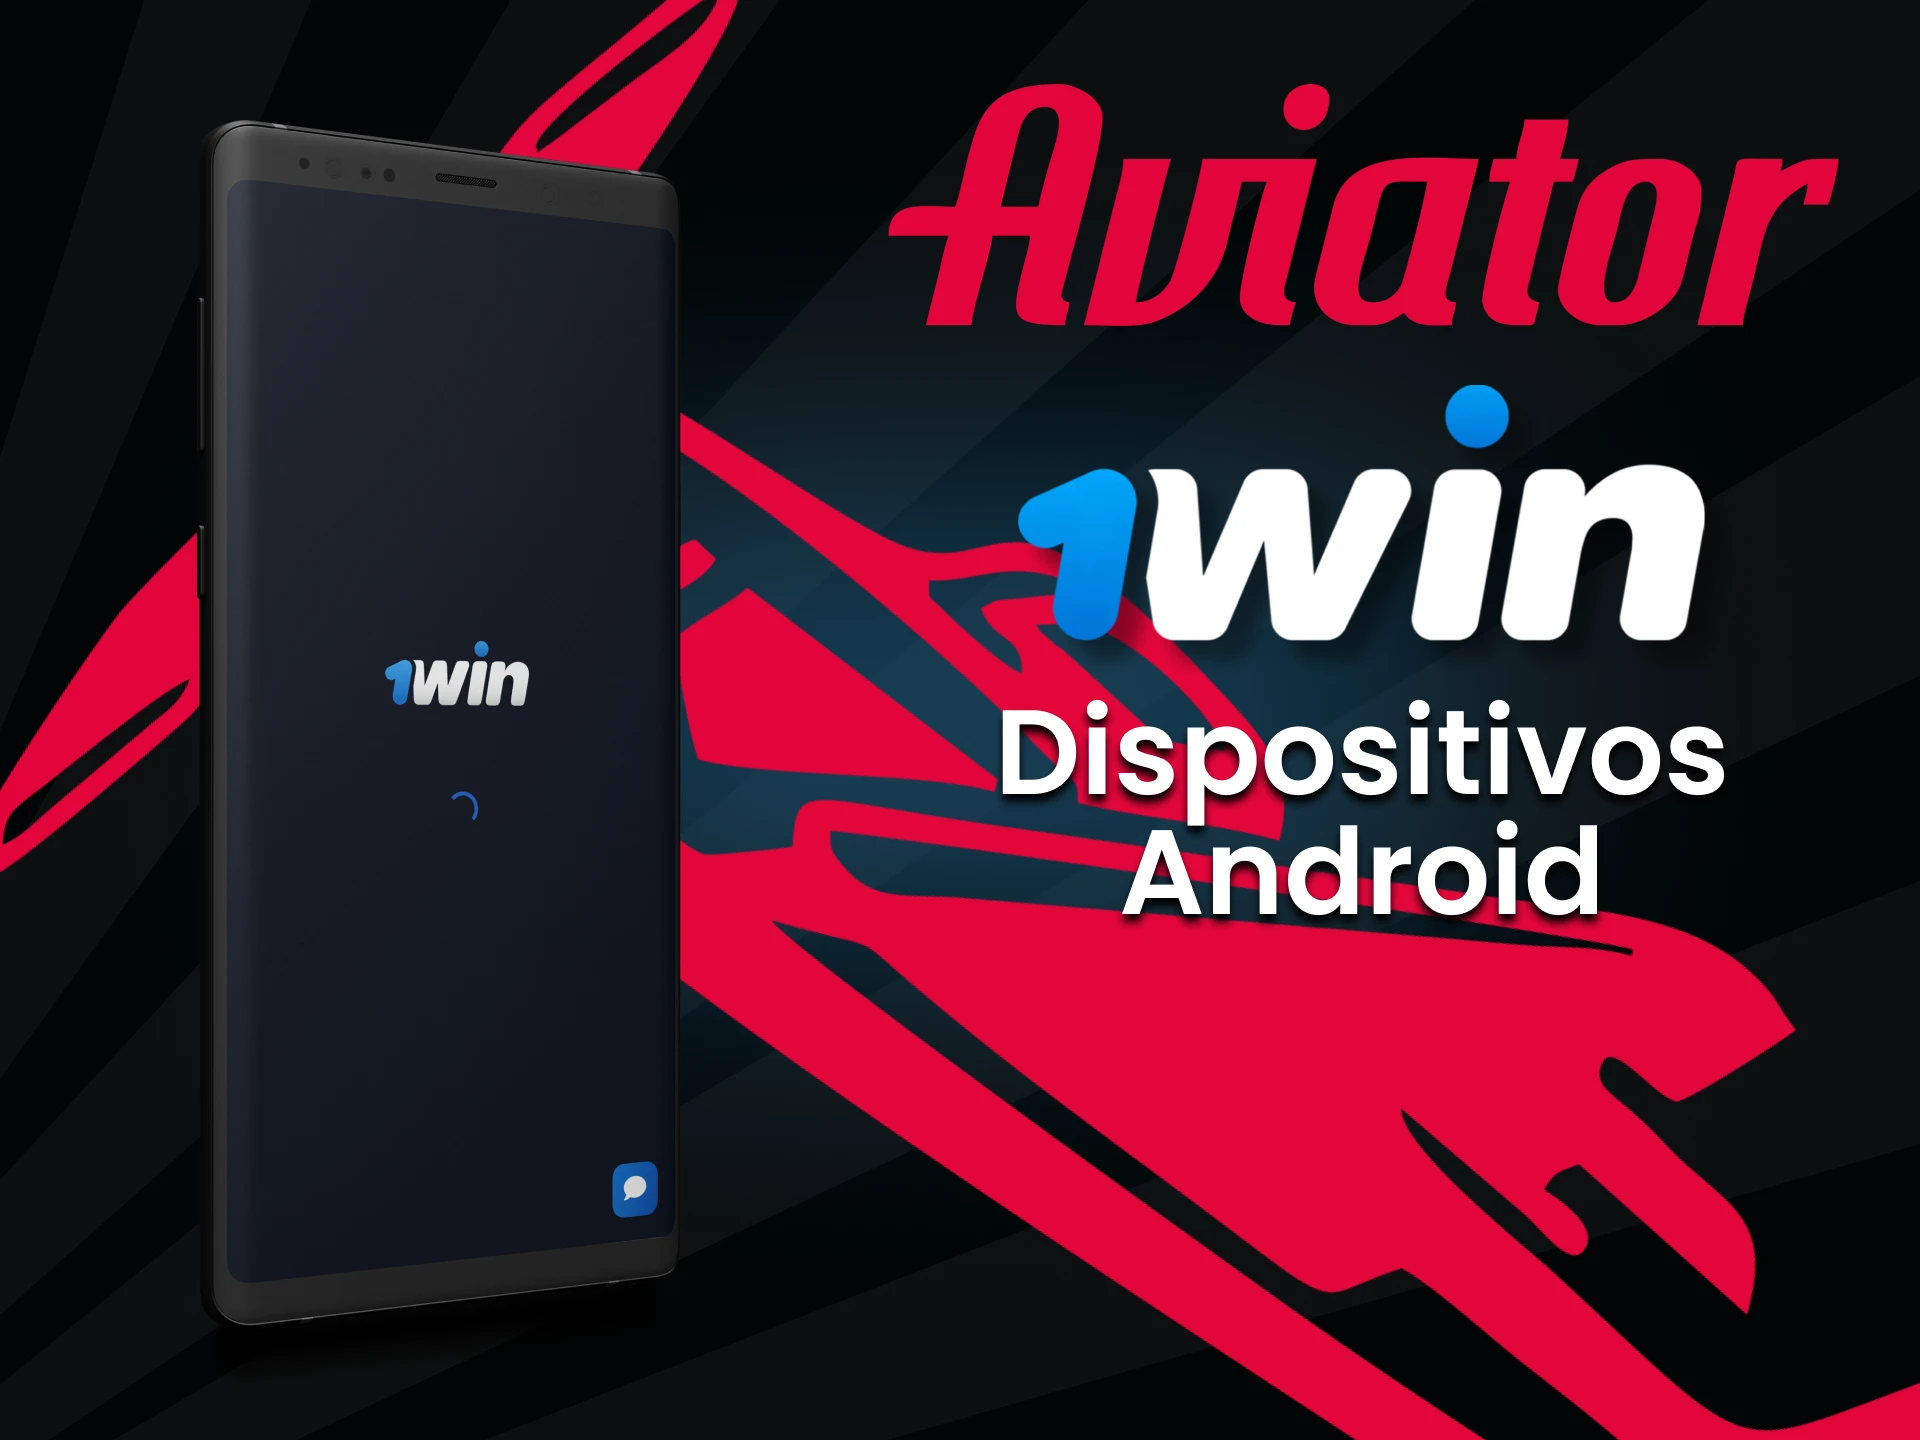 Baixe o aplicativo Android 1win para jogar Aviator.